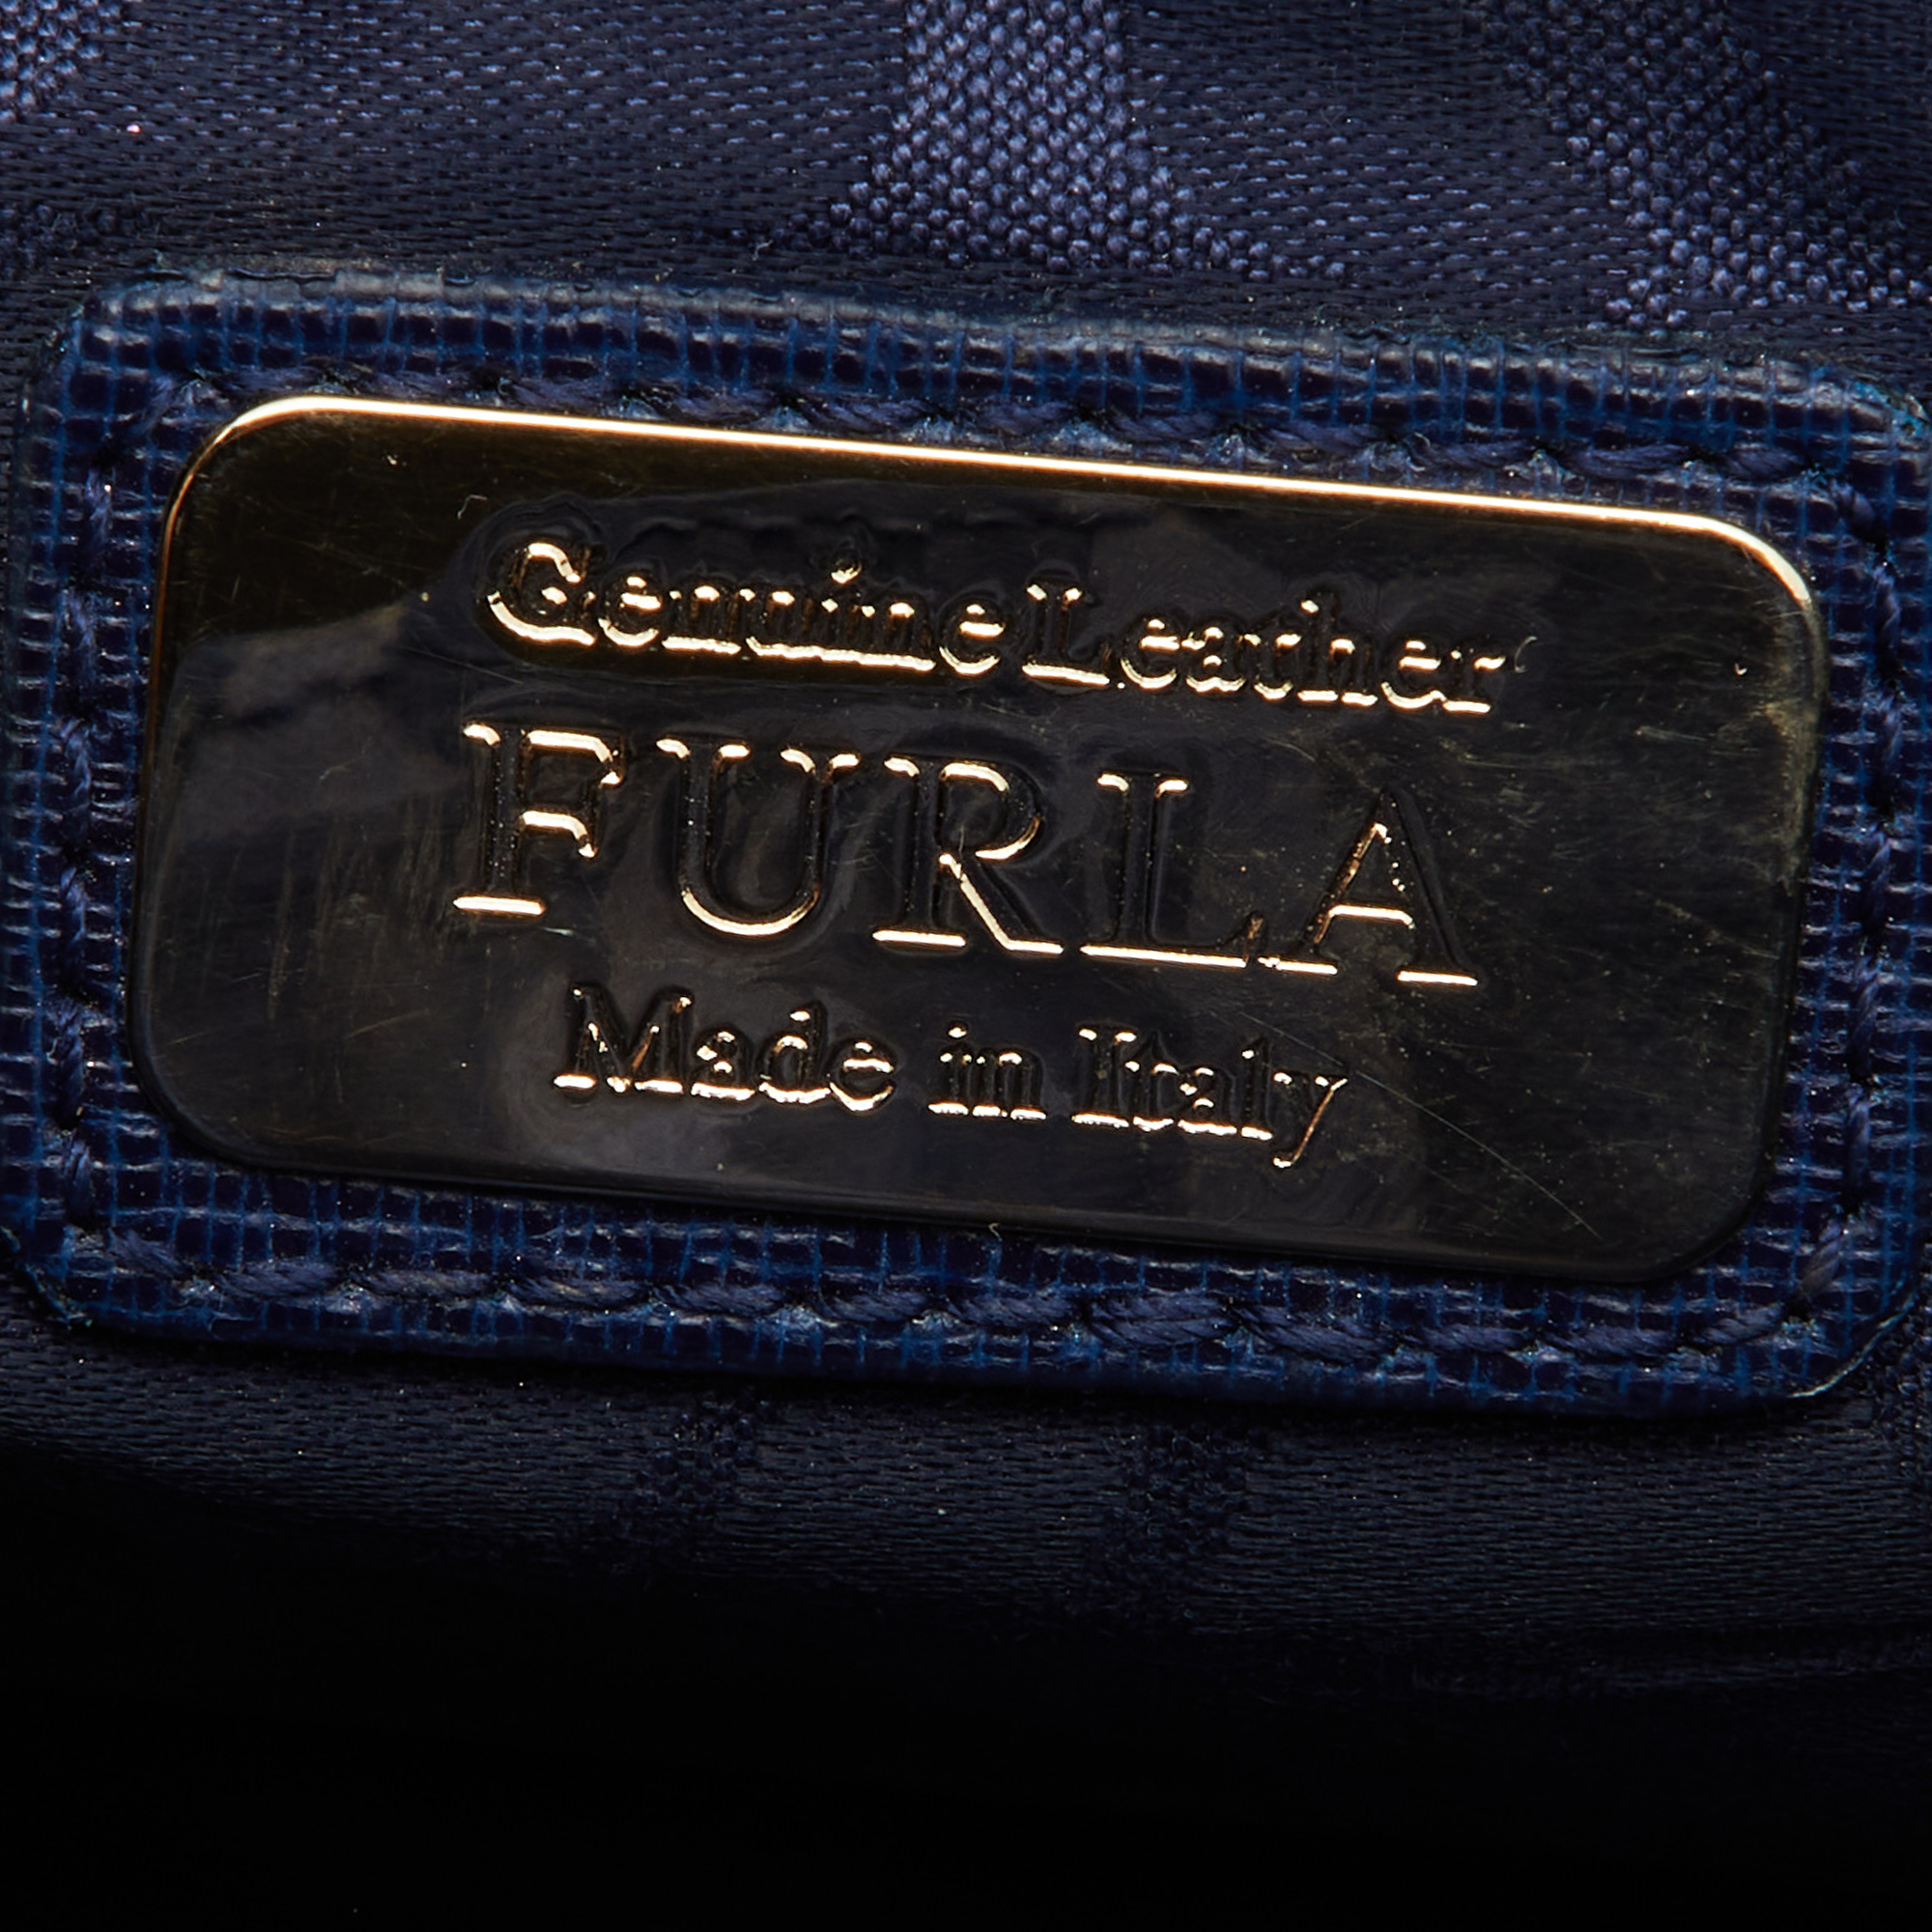 Furla Blue/Black Leather Flap Chain Shoulder Bag